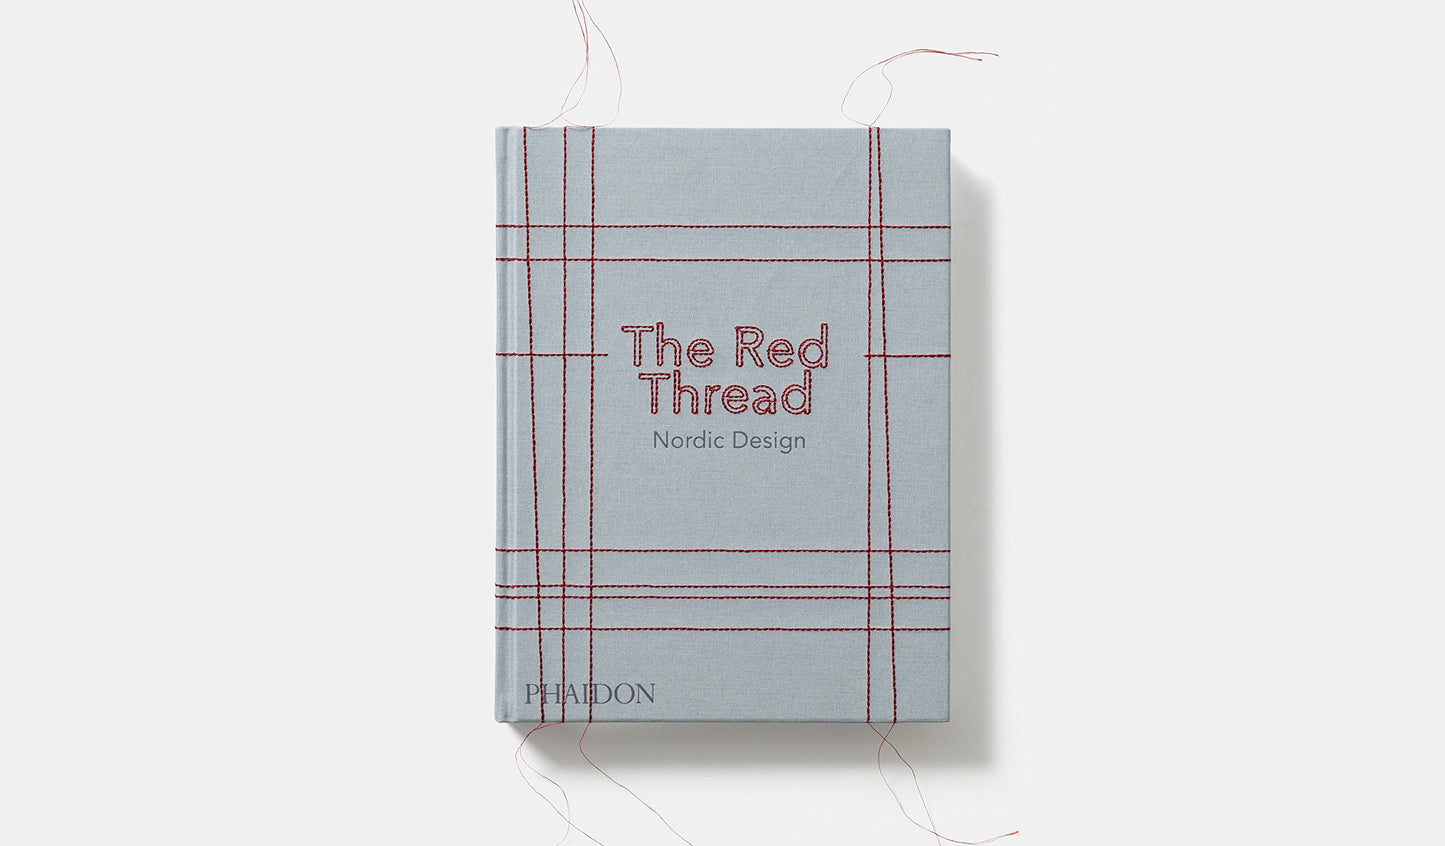 The Red Thread: Nordic Design